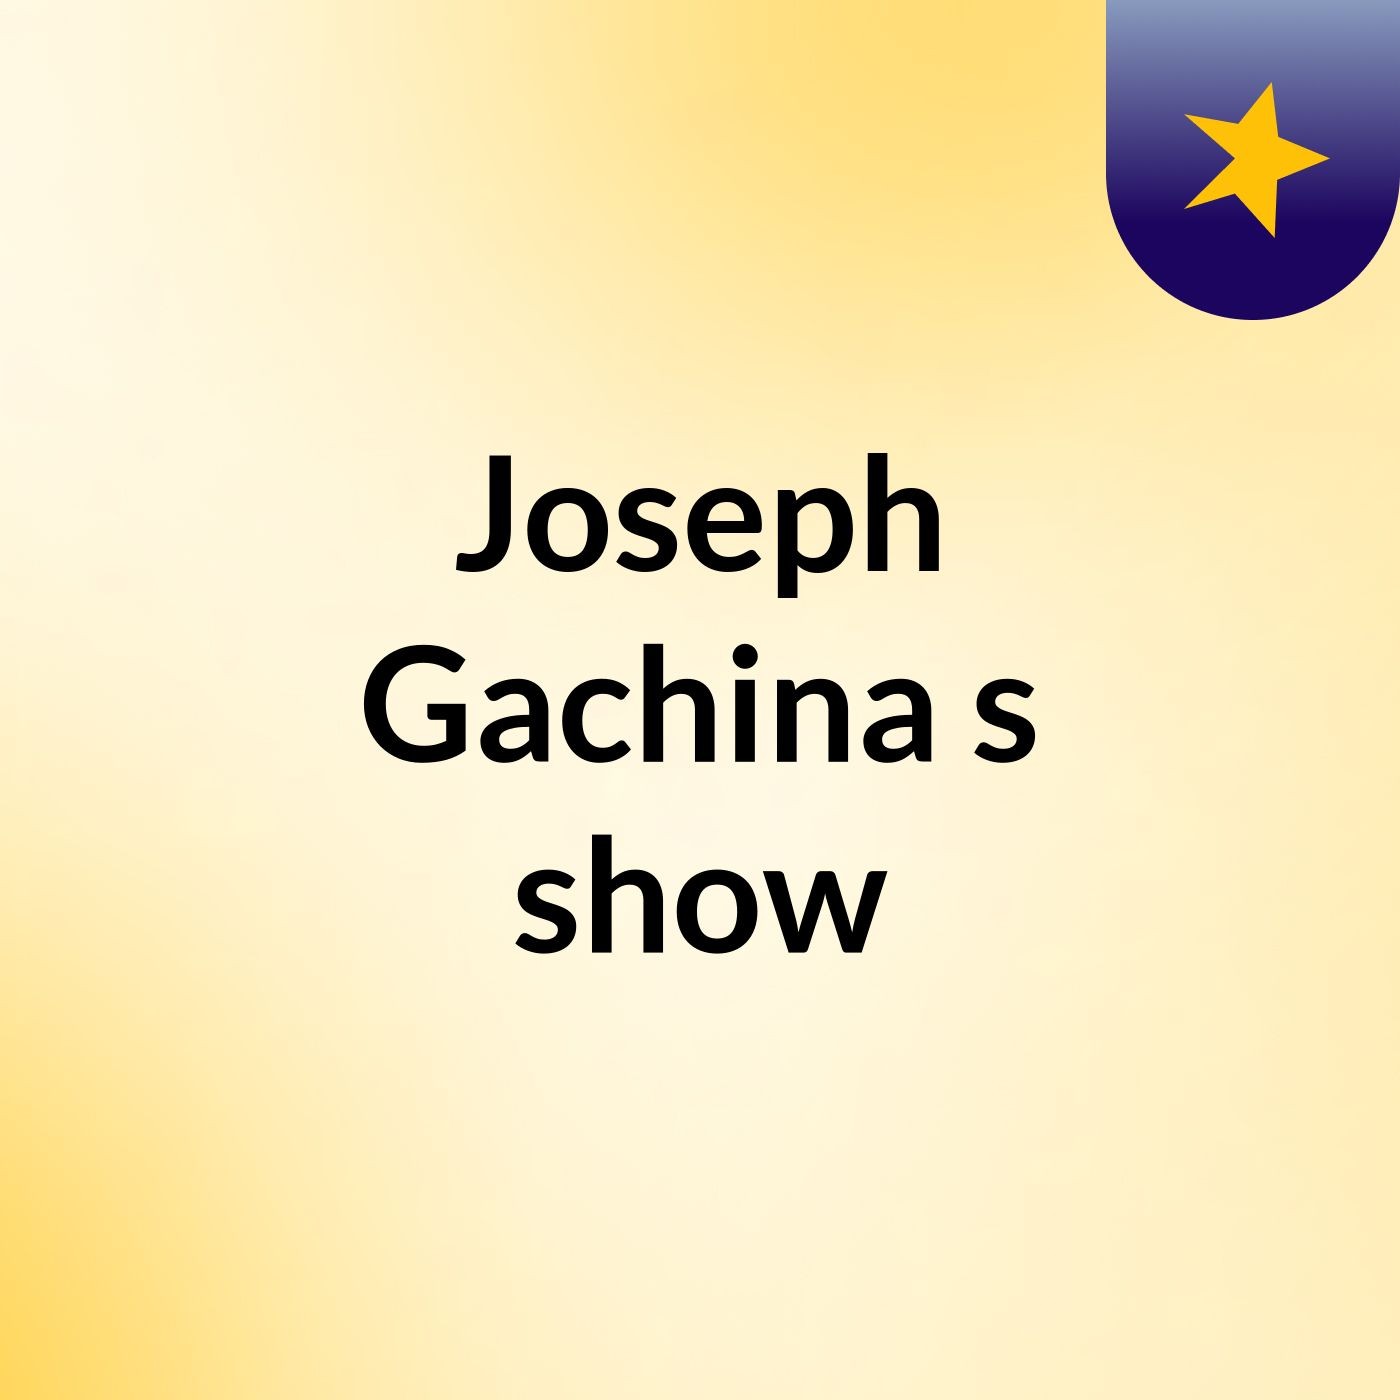 Joseph Gachina's show